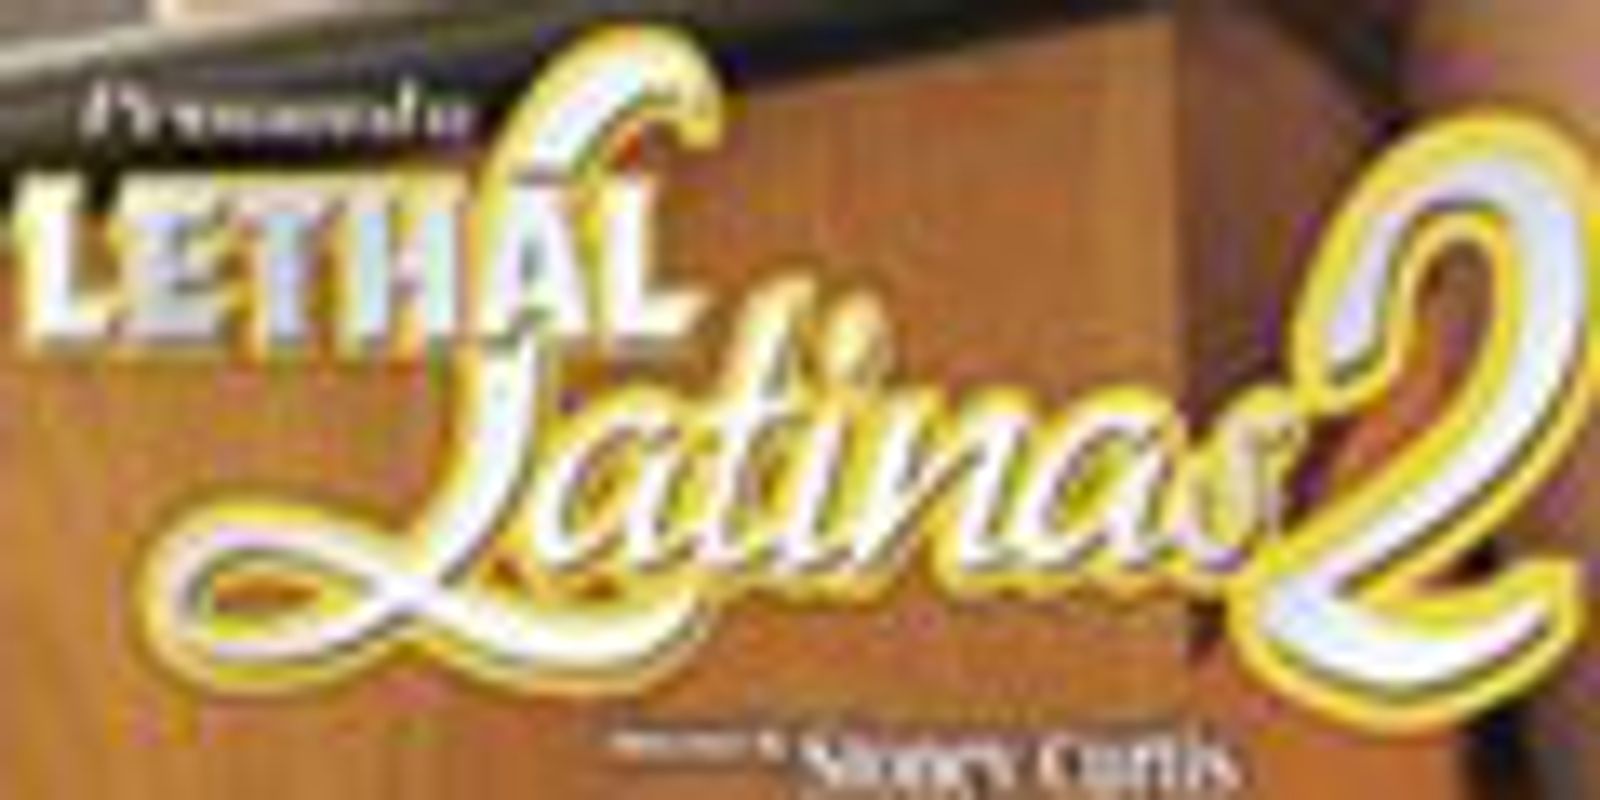 Lethal to Do <i>Latina</i> Series